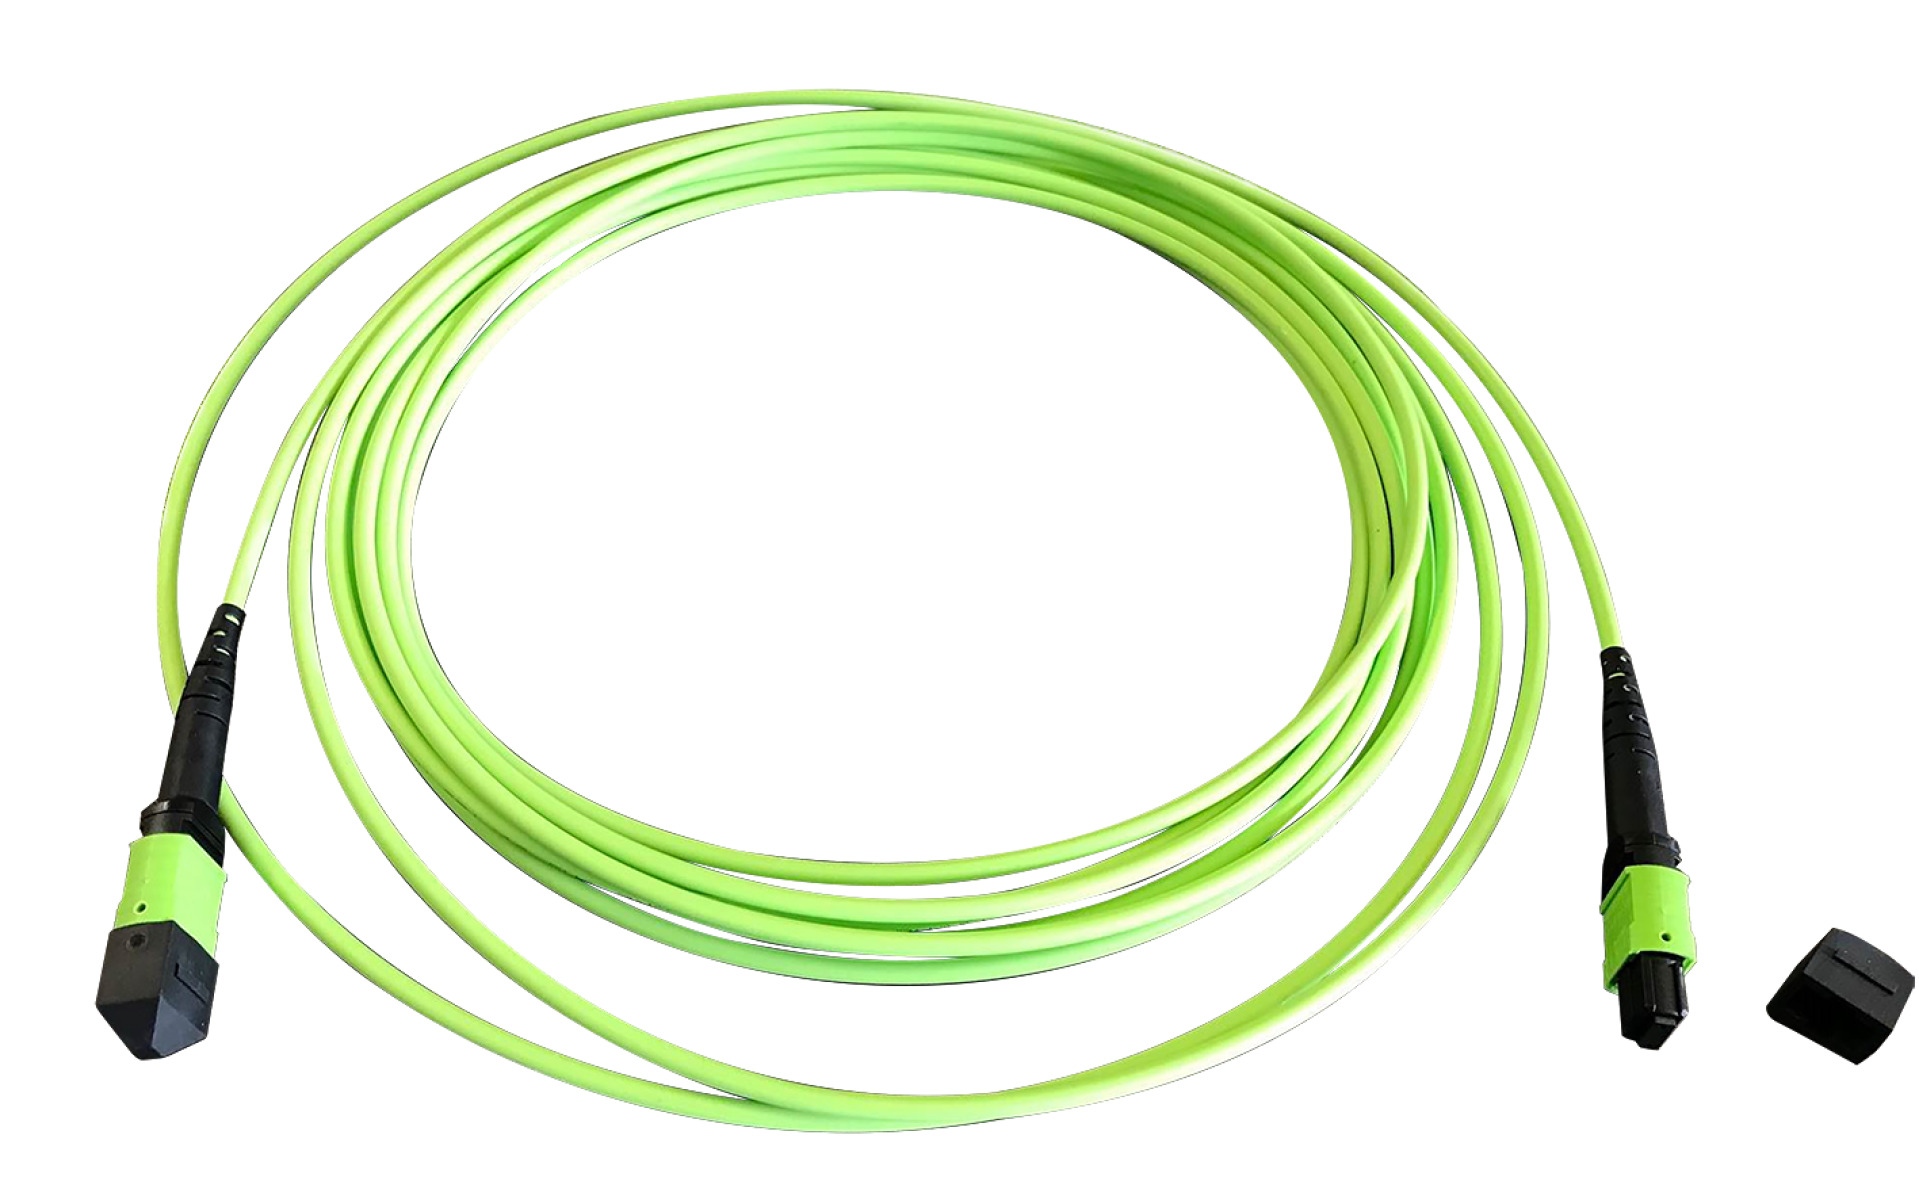 MTP®-F/MTP®-F 12-fiber matrix patch cable OM5, LSZH lime green, Code B, 3m